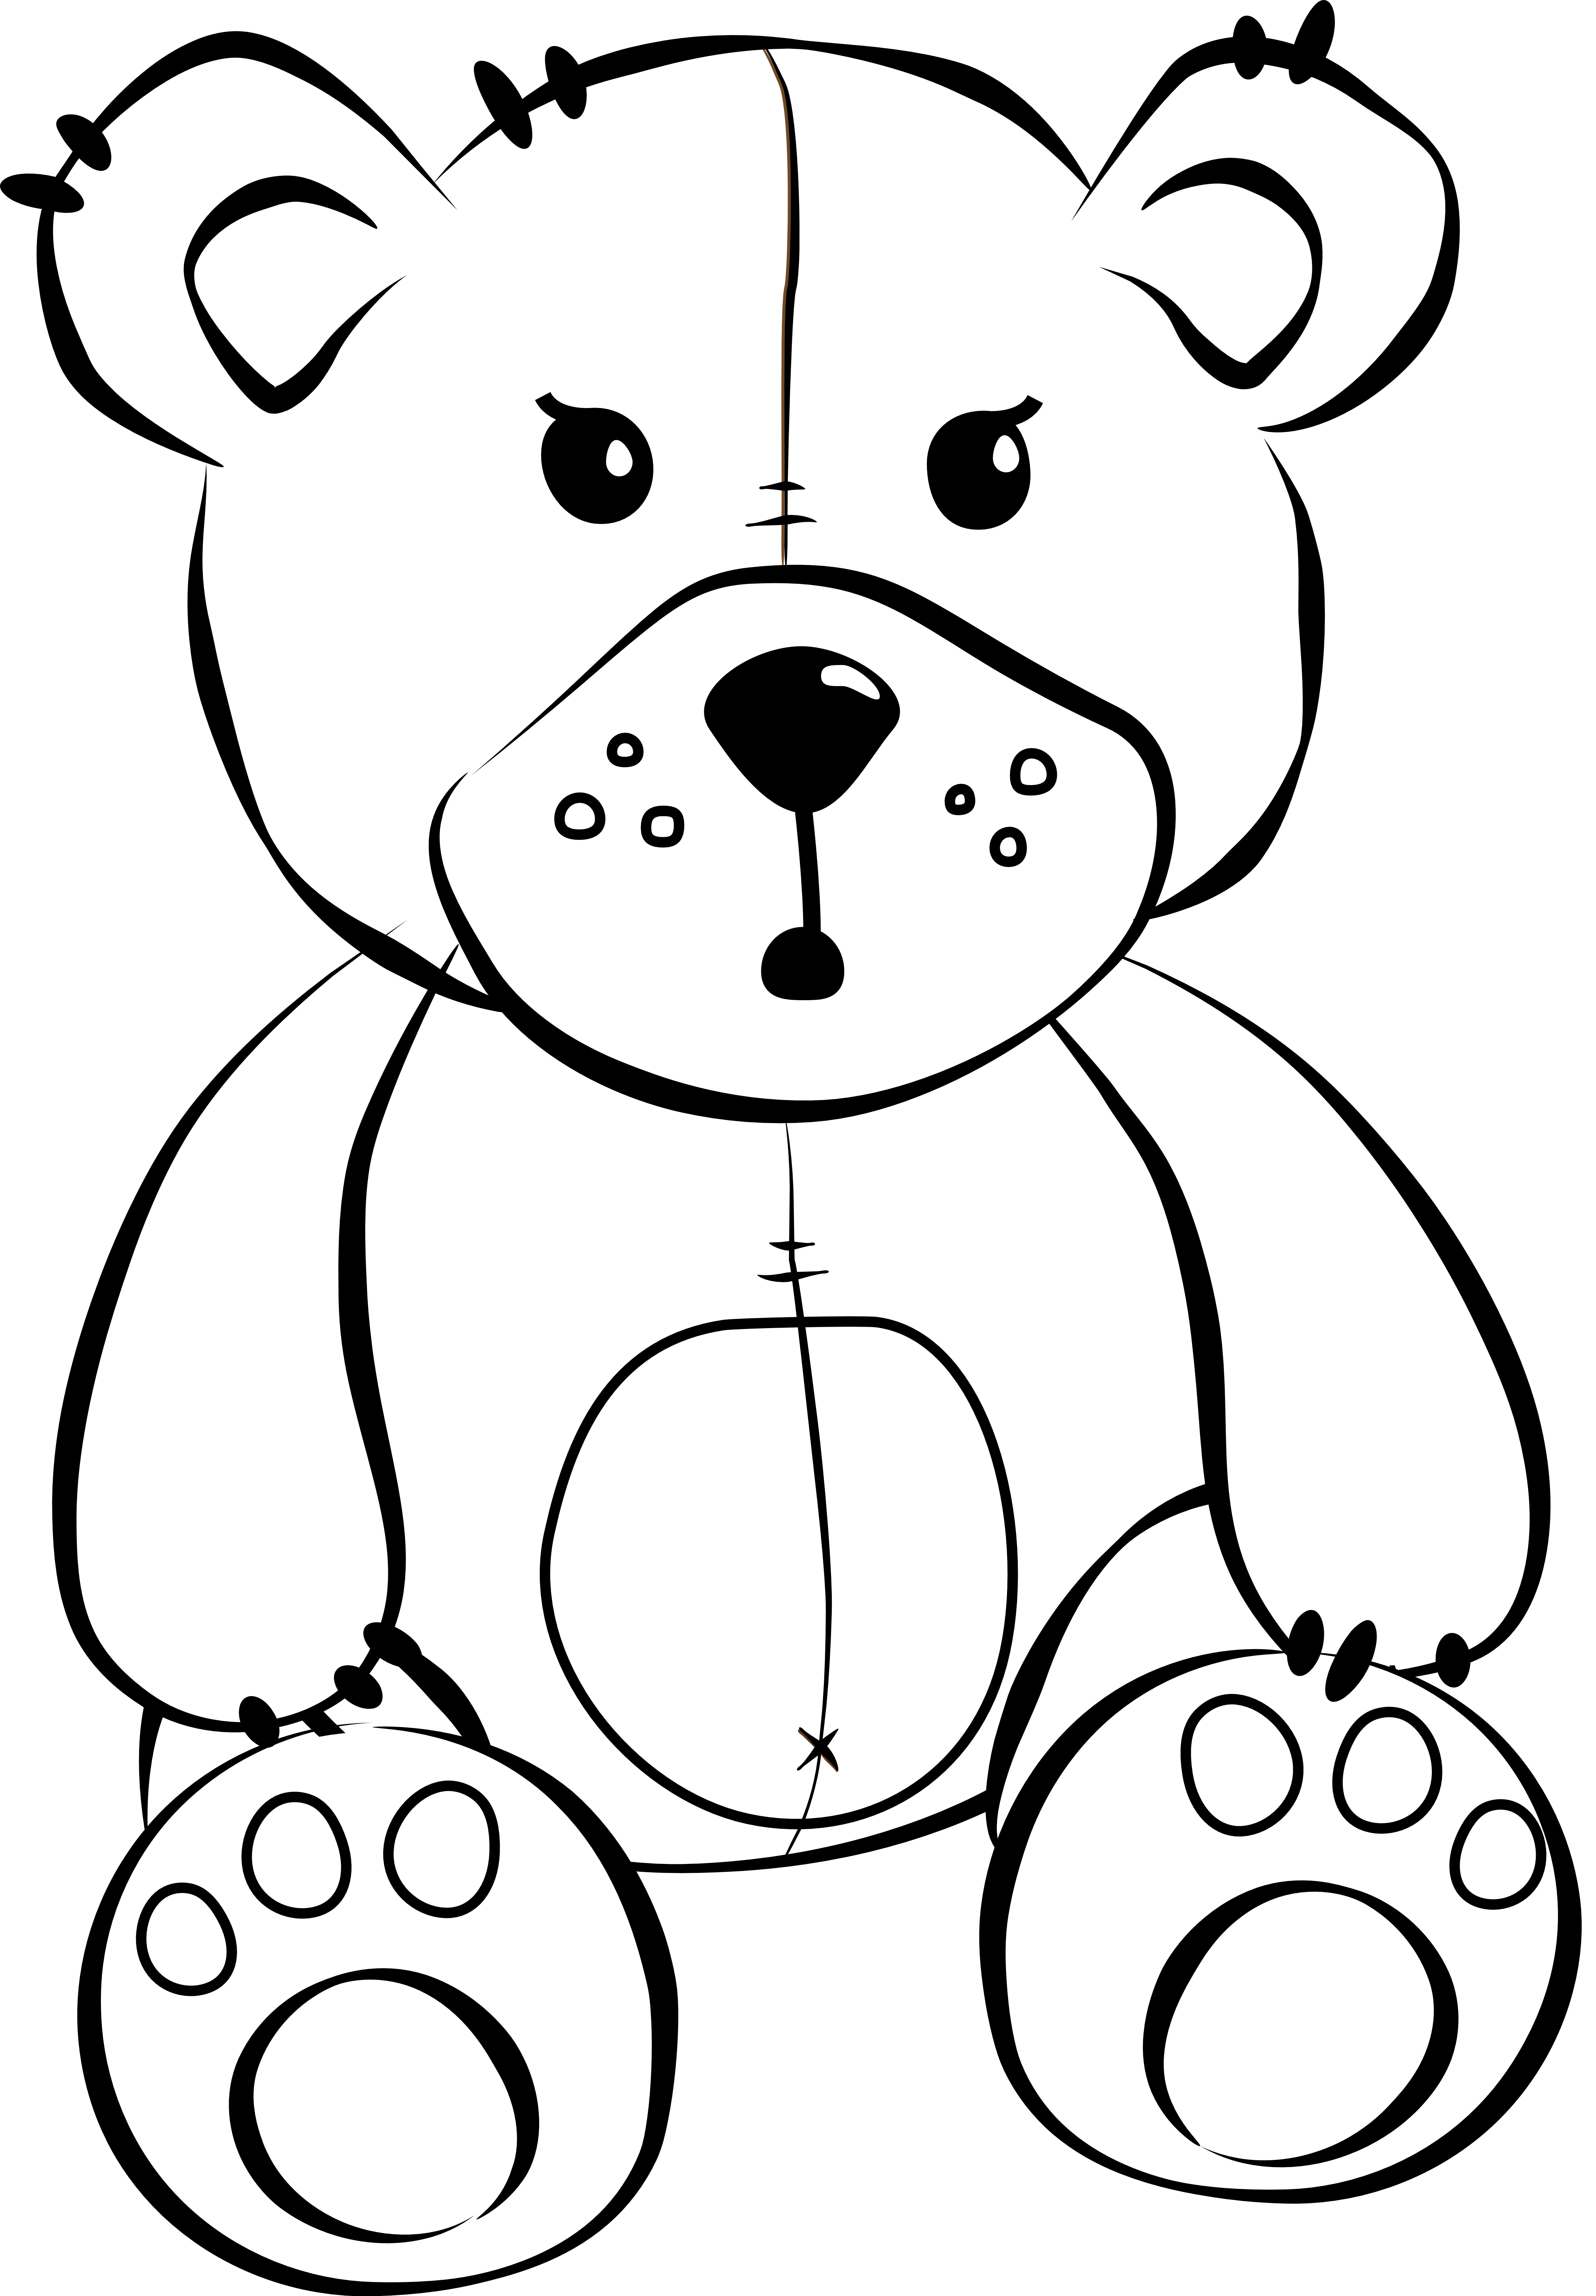 Teddy bear  black and white white bear cartoon free download clip art on